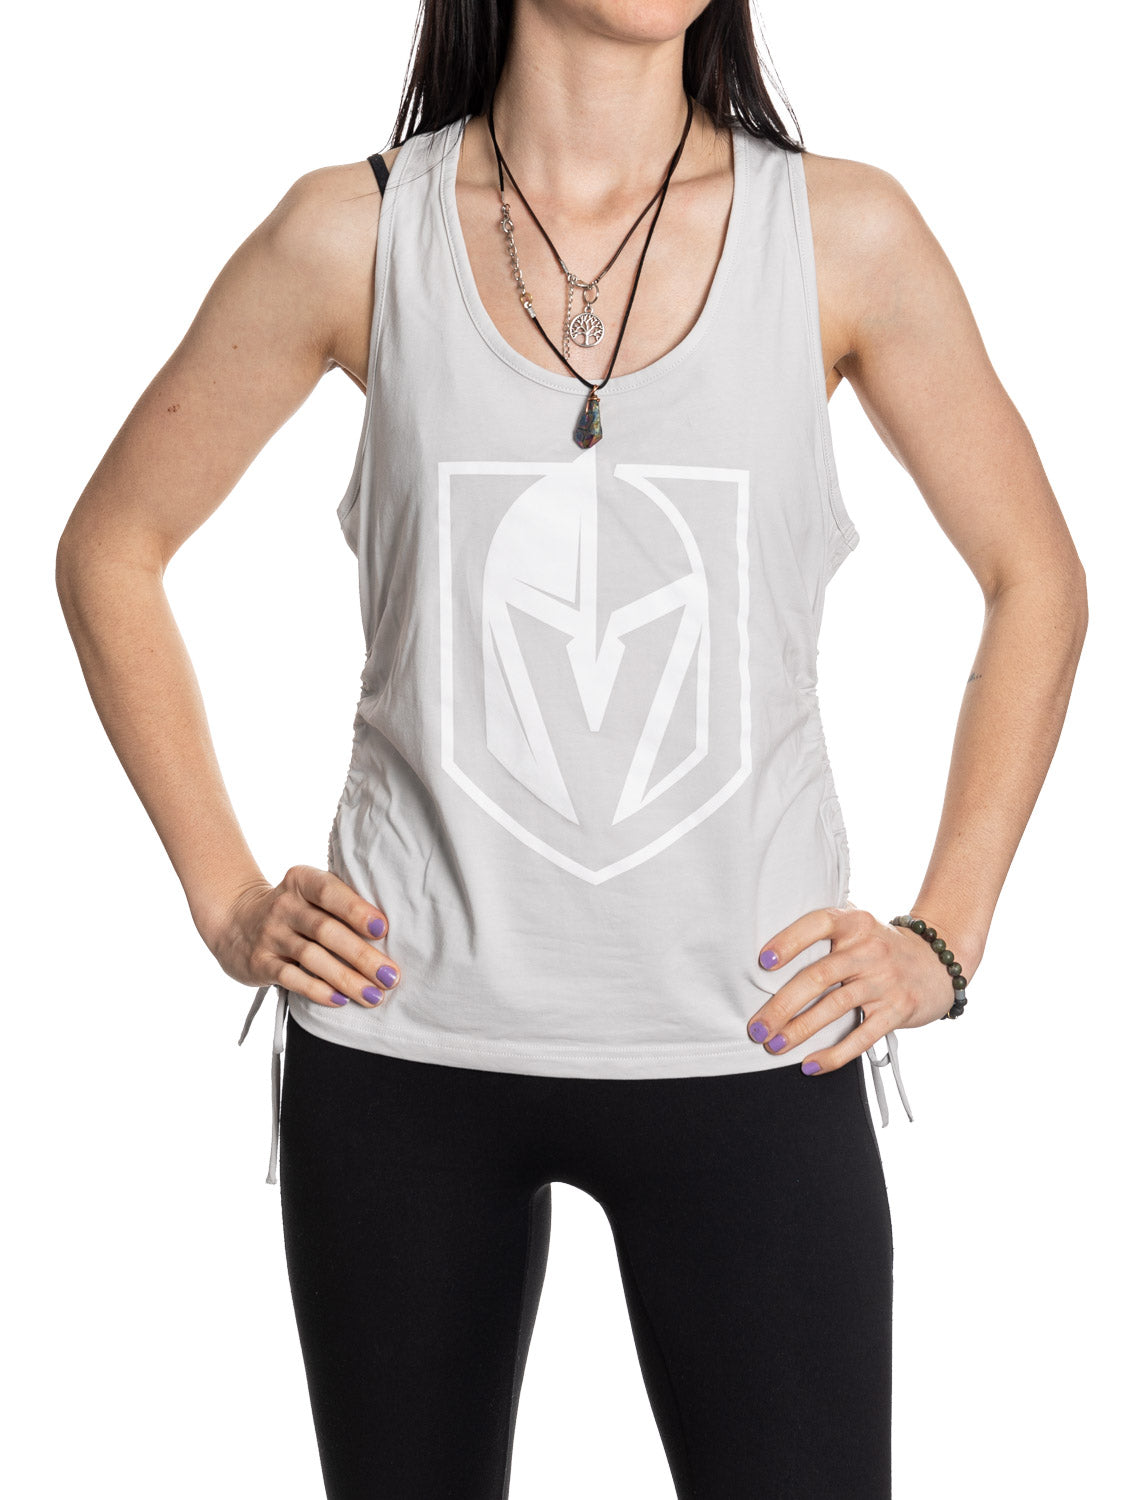 Vegas Golden Knights Women's Adjustable Jersey Knit Tank Top